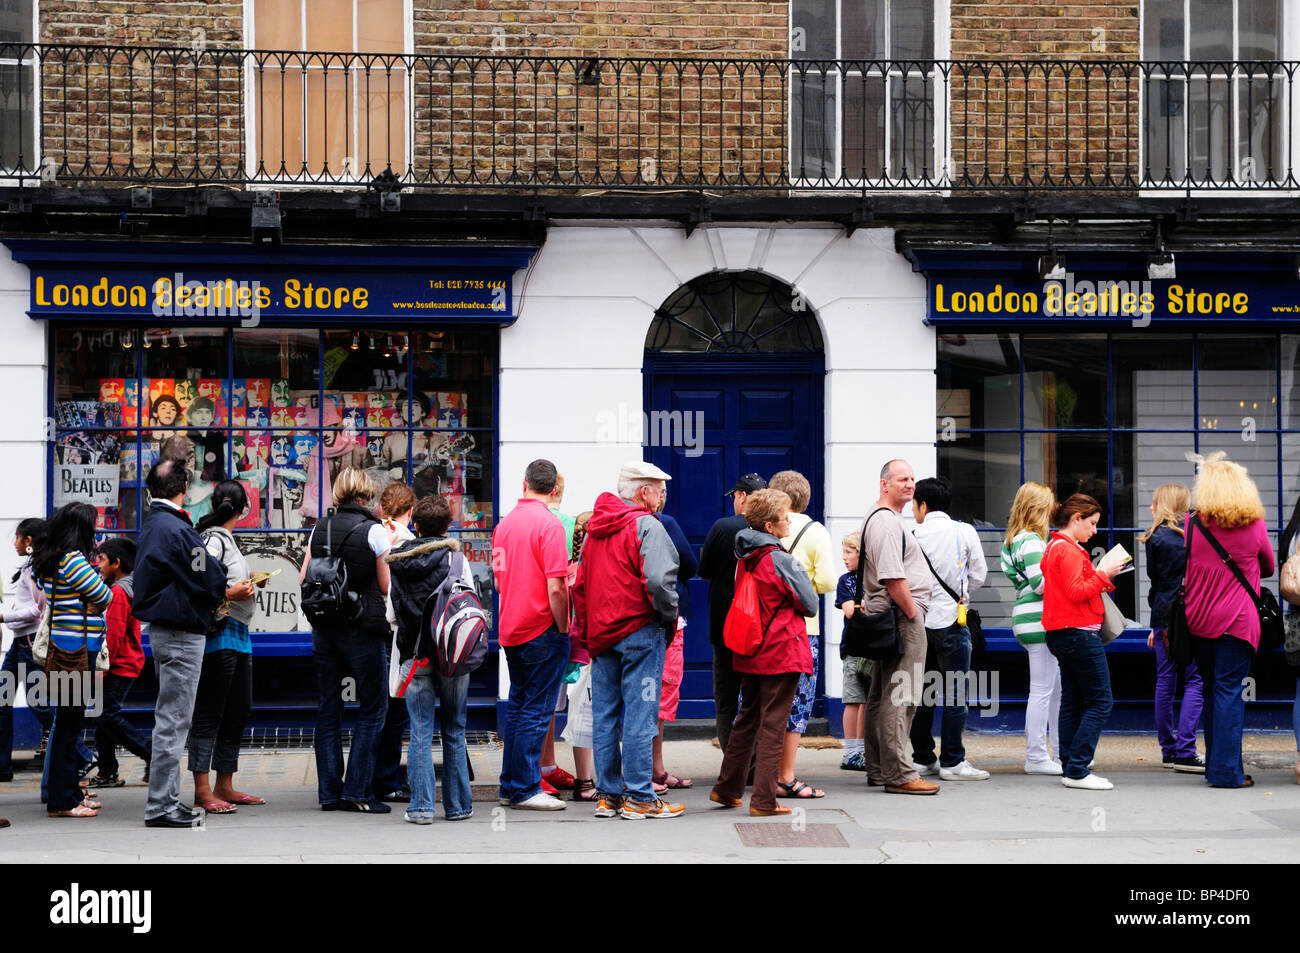 The London Beatles Store, Baker Street, London, England, UK Stock Photo